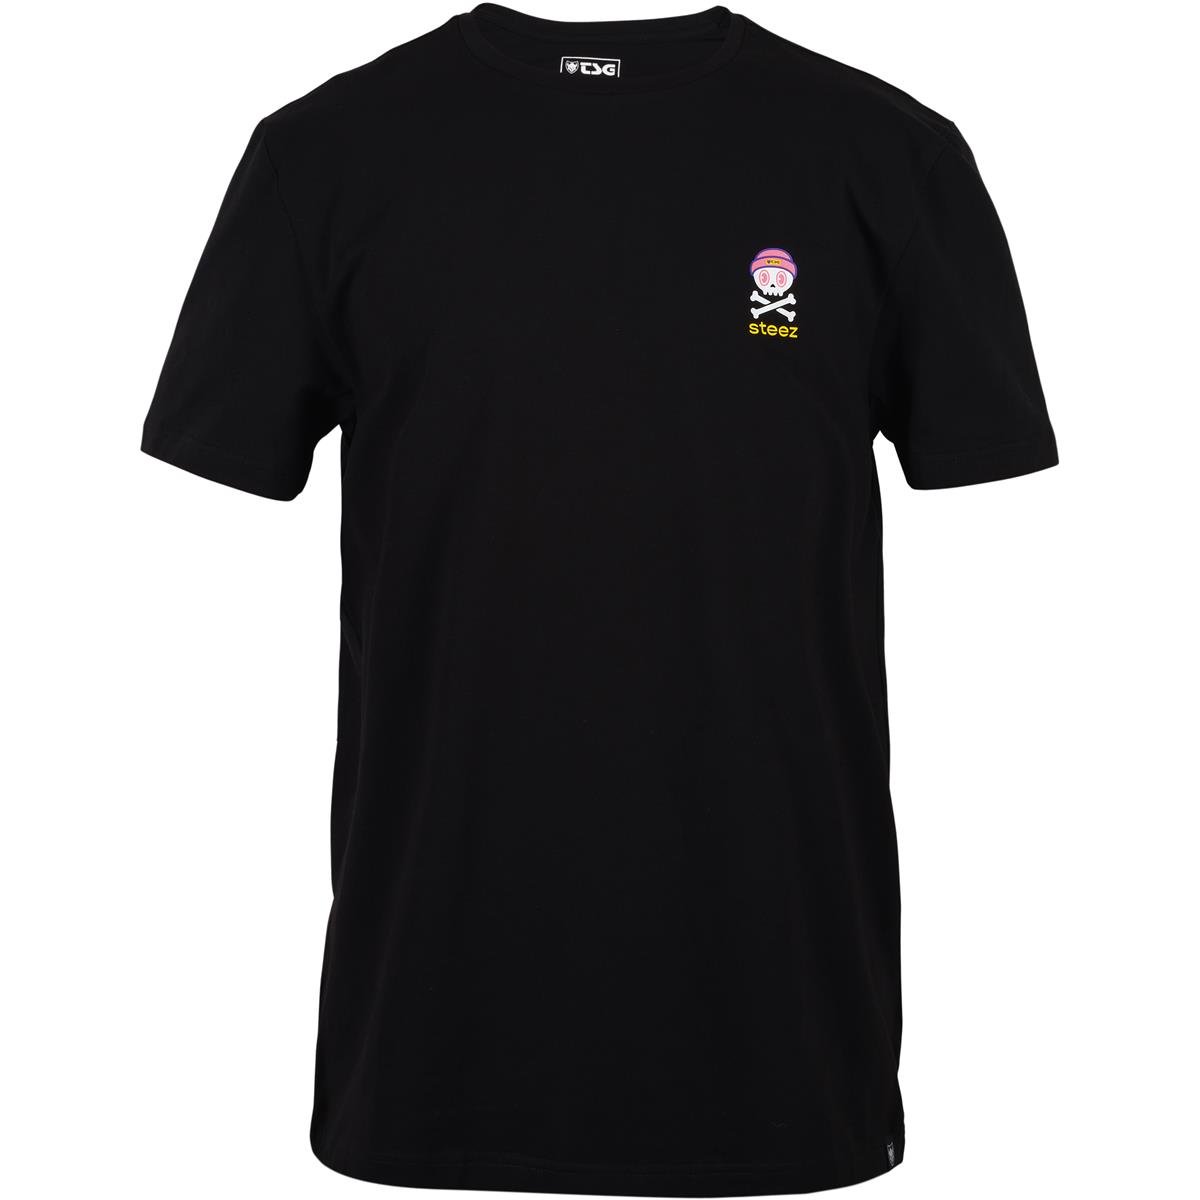 TSG T-Shirt Steezy Nero